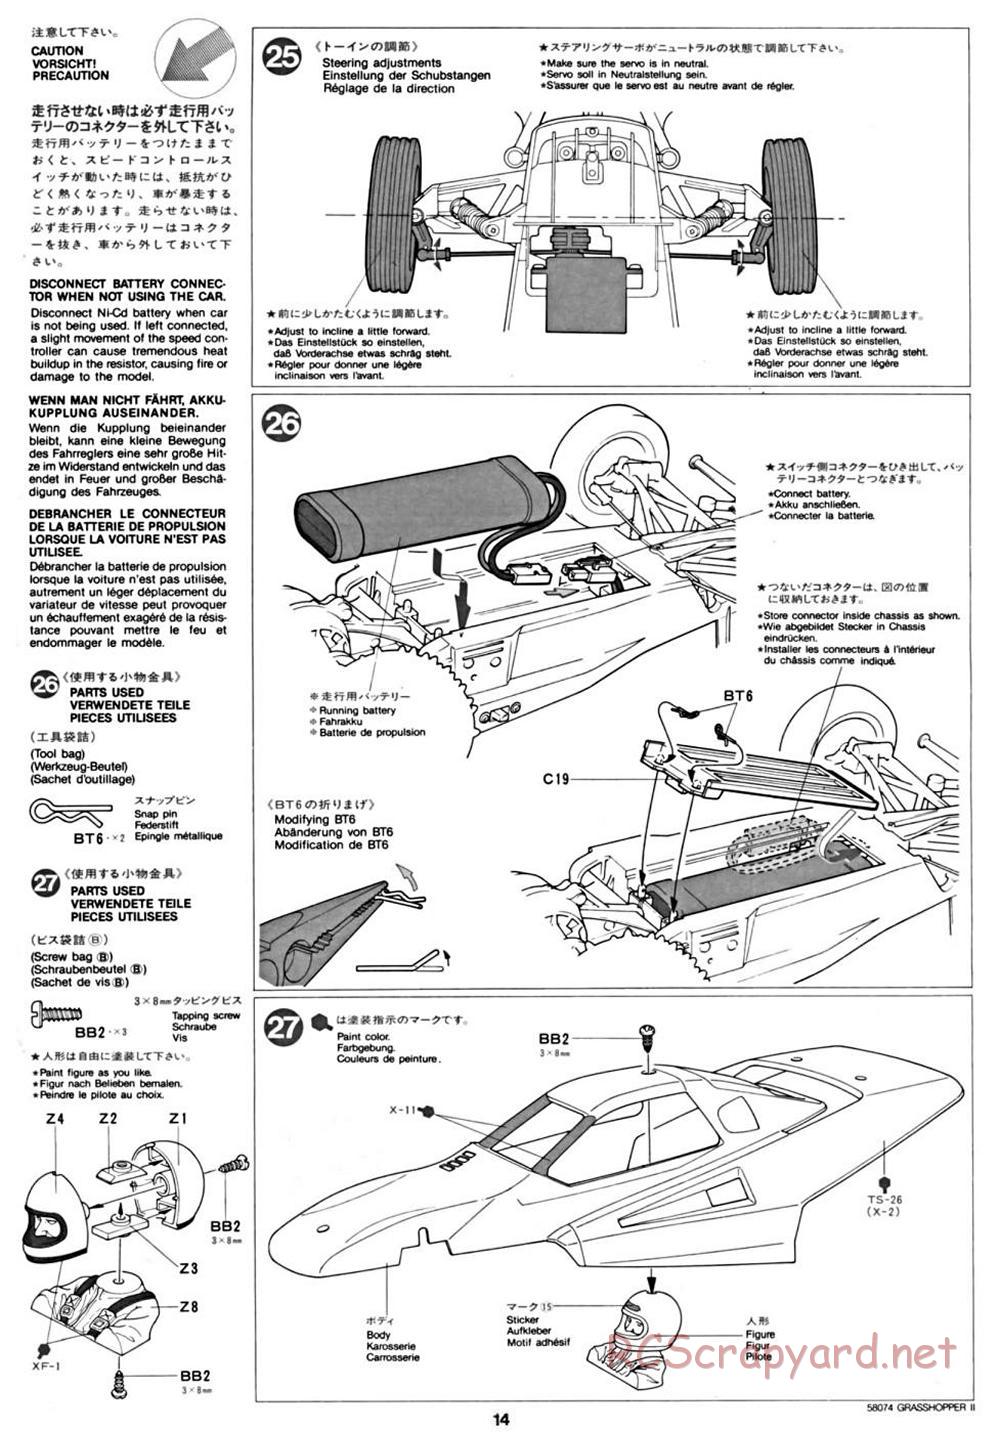 Tamiya - The Grasshopper II - 58074 - Manual - Page 14